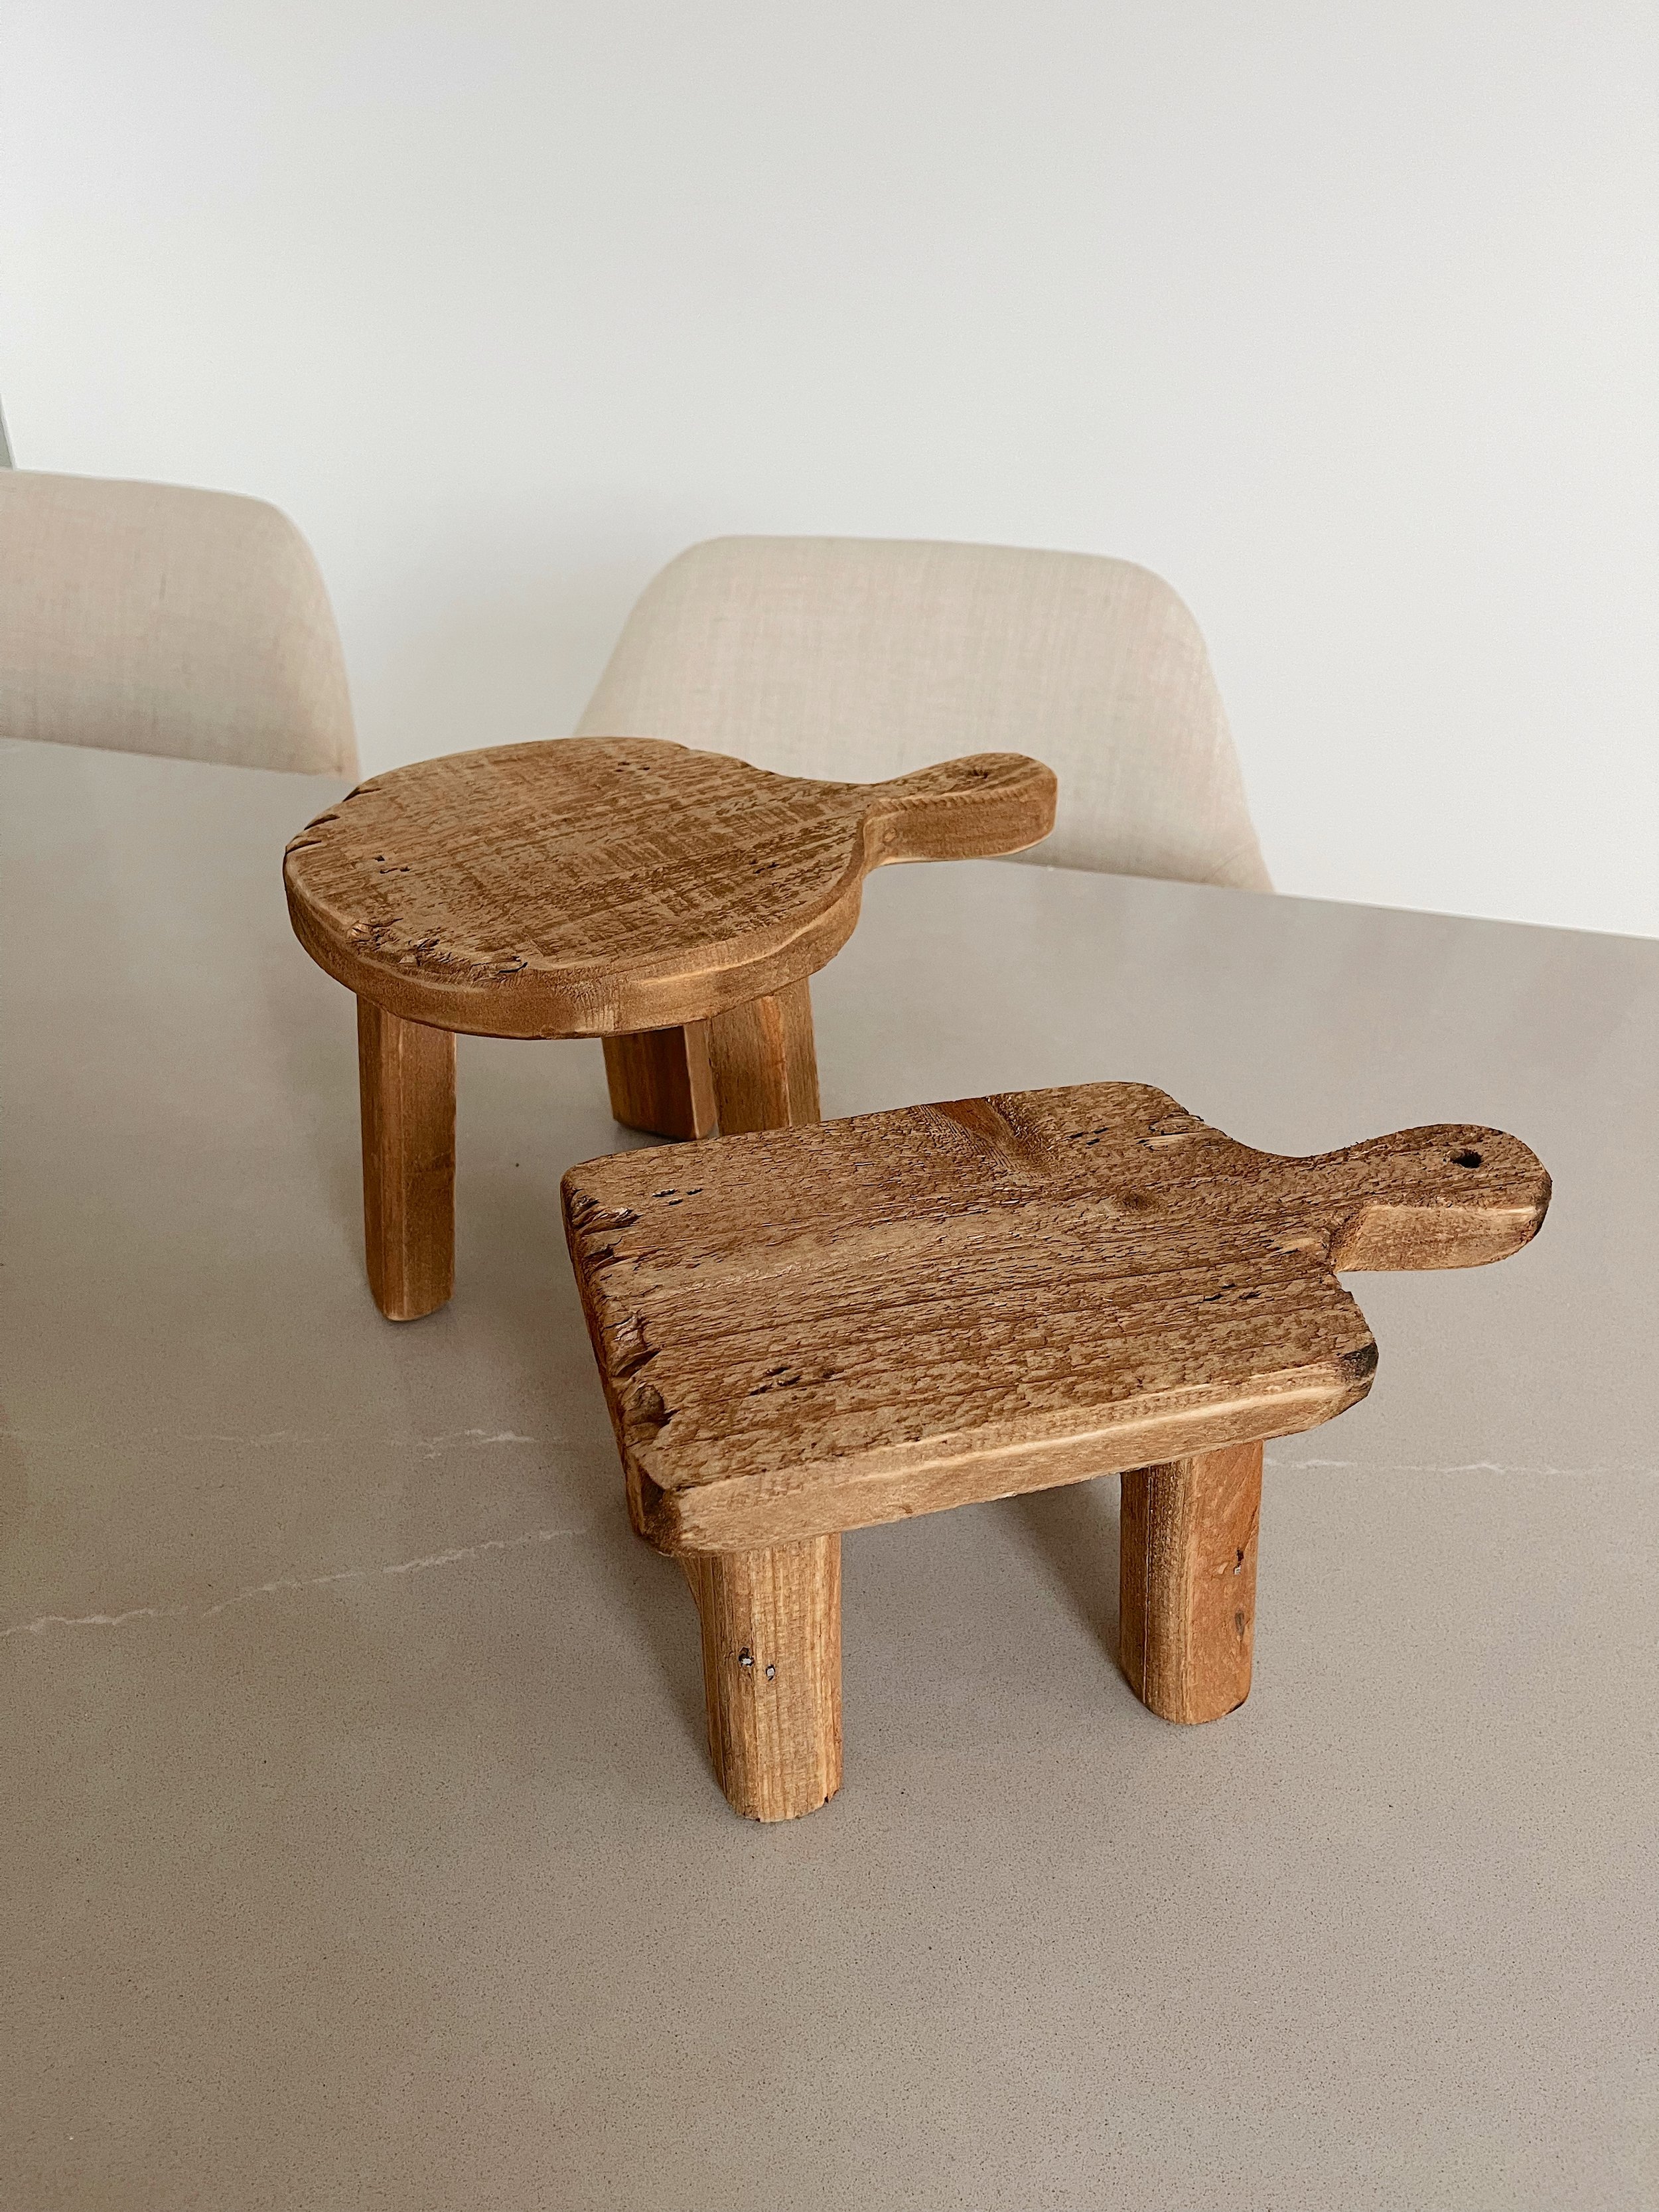 Amazon Home Finds Under $50 - wooden stools - bresheppard.com.JPG